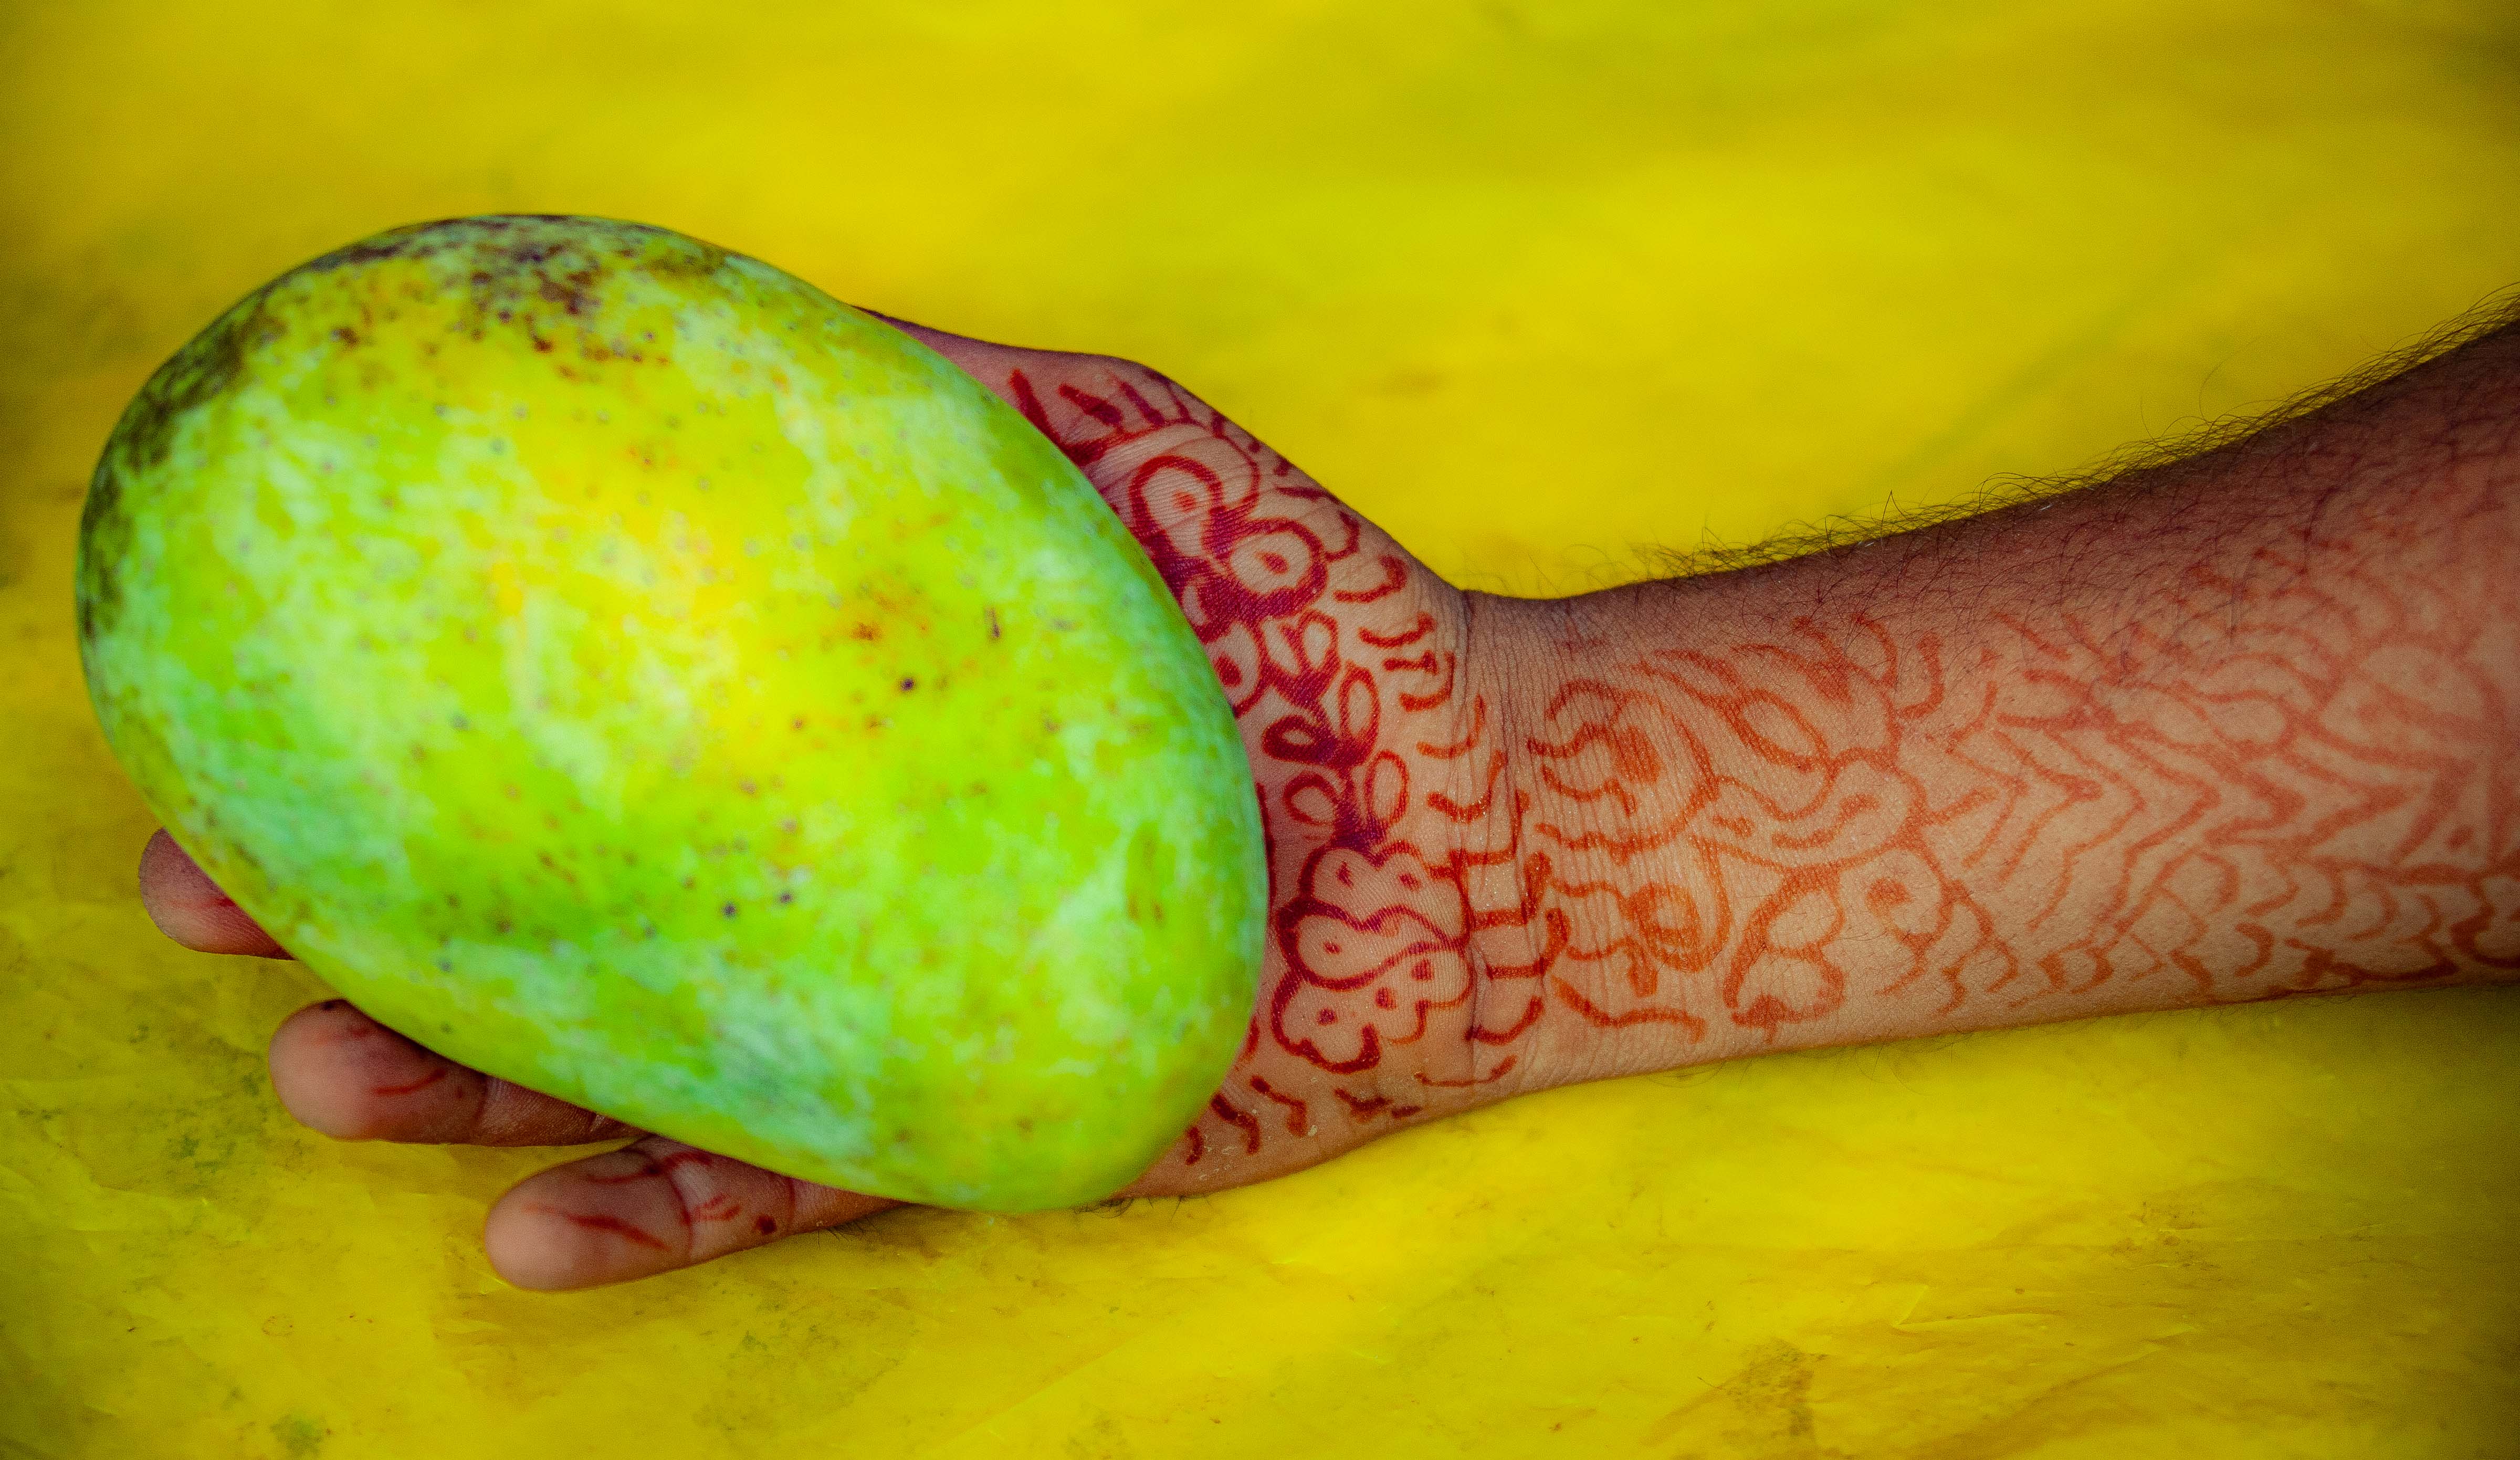 Bangladesh, Kishorenganj Prov, Henna Hand, 2009, IMG 8671